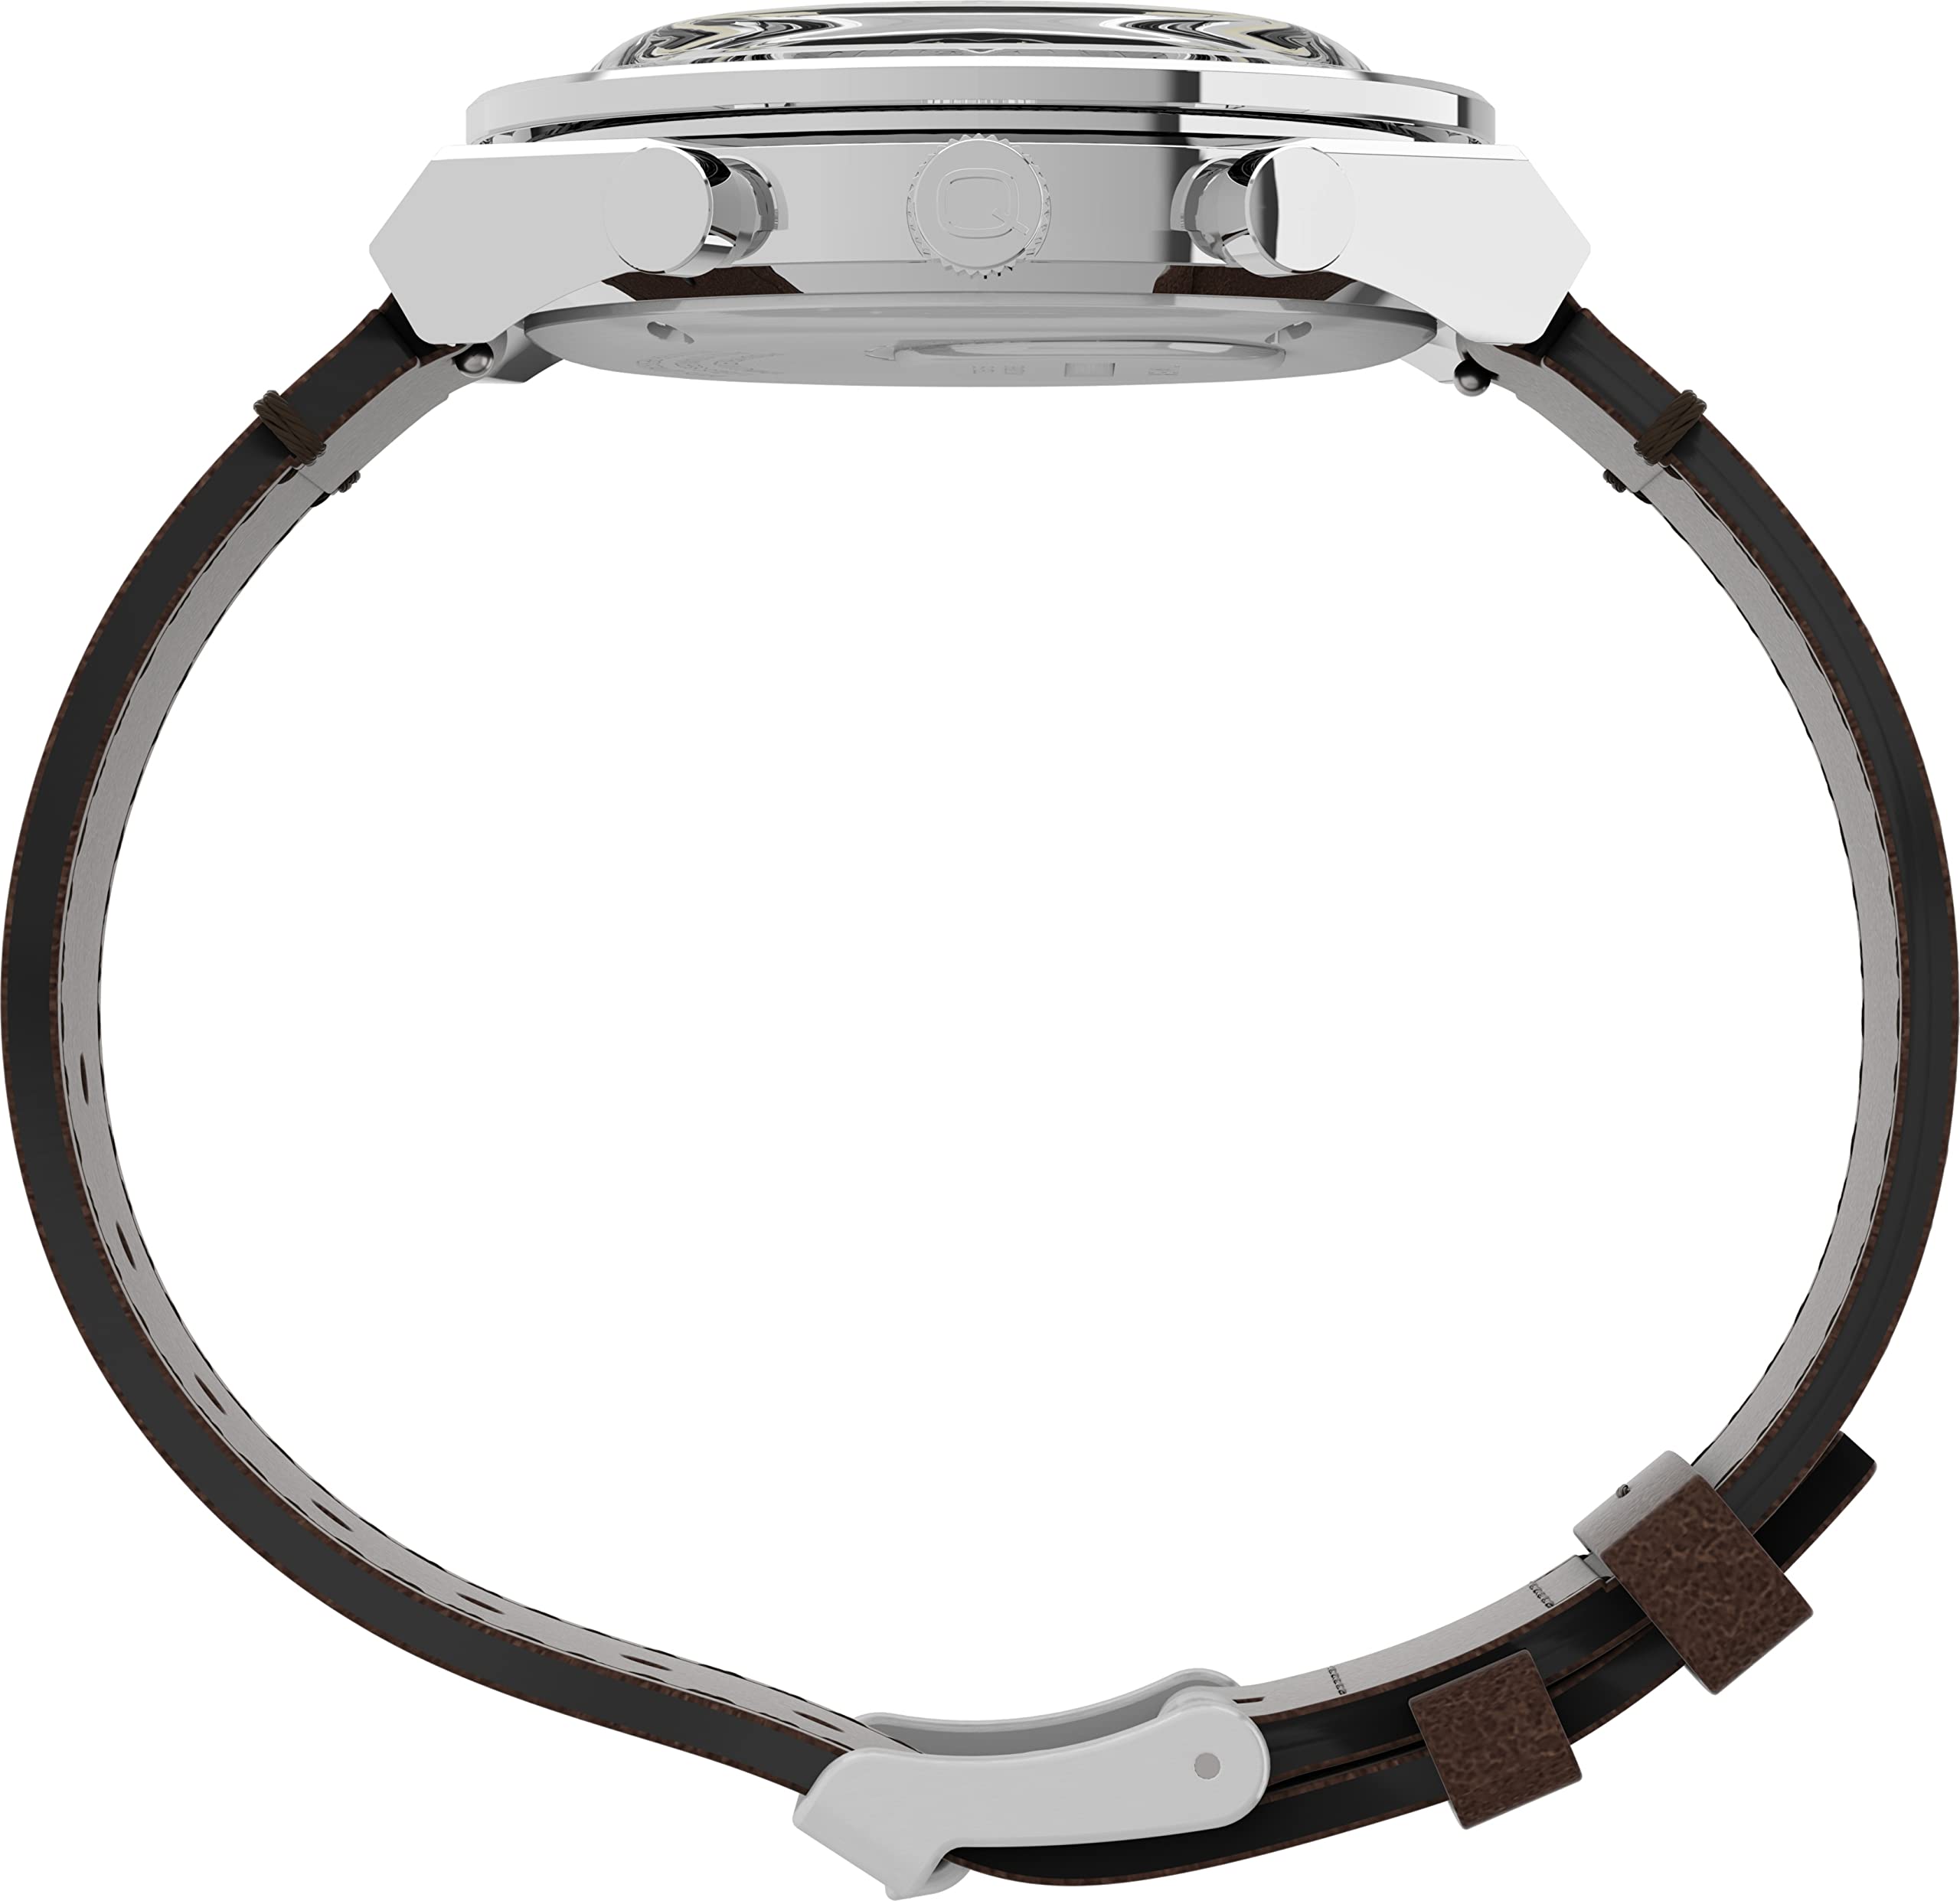 Q Timex Men's 40mm Watch – Black Dial Silver-Tone Case Black Bracelet